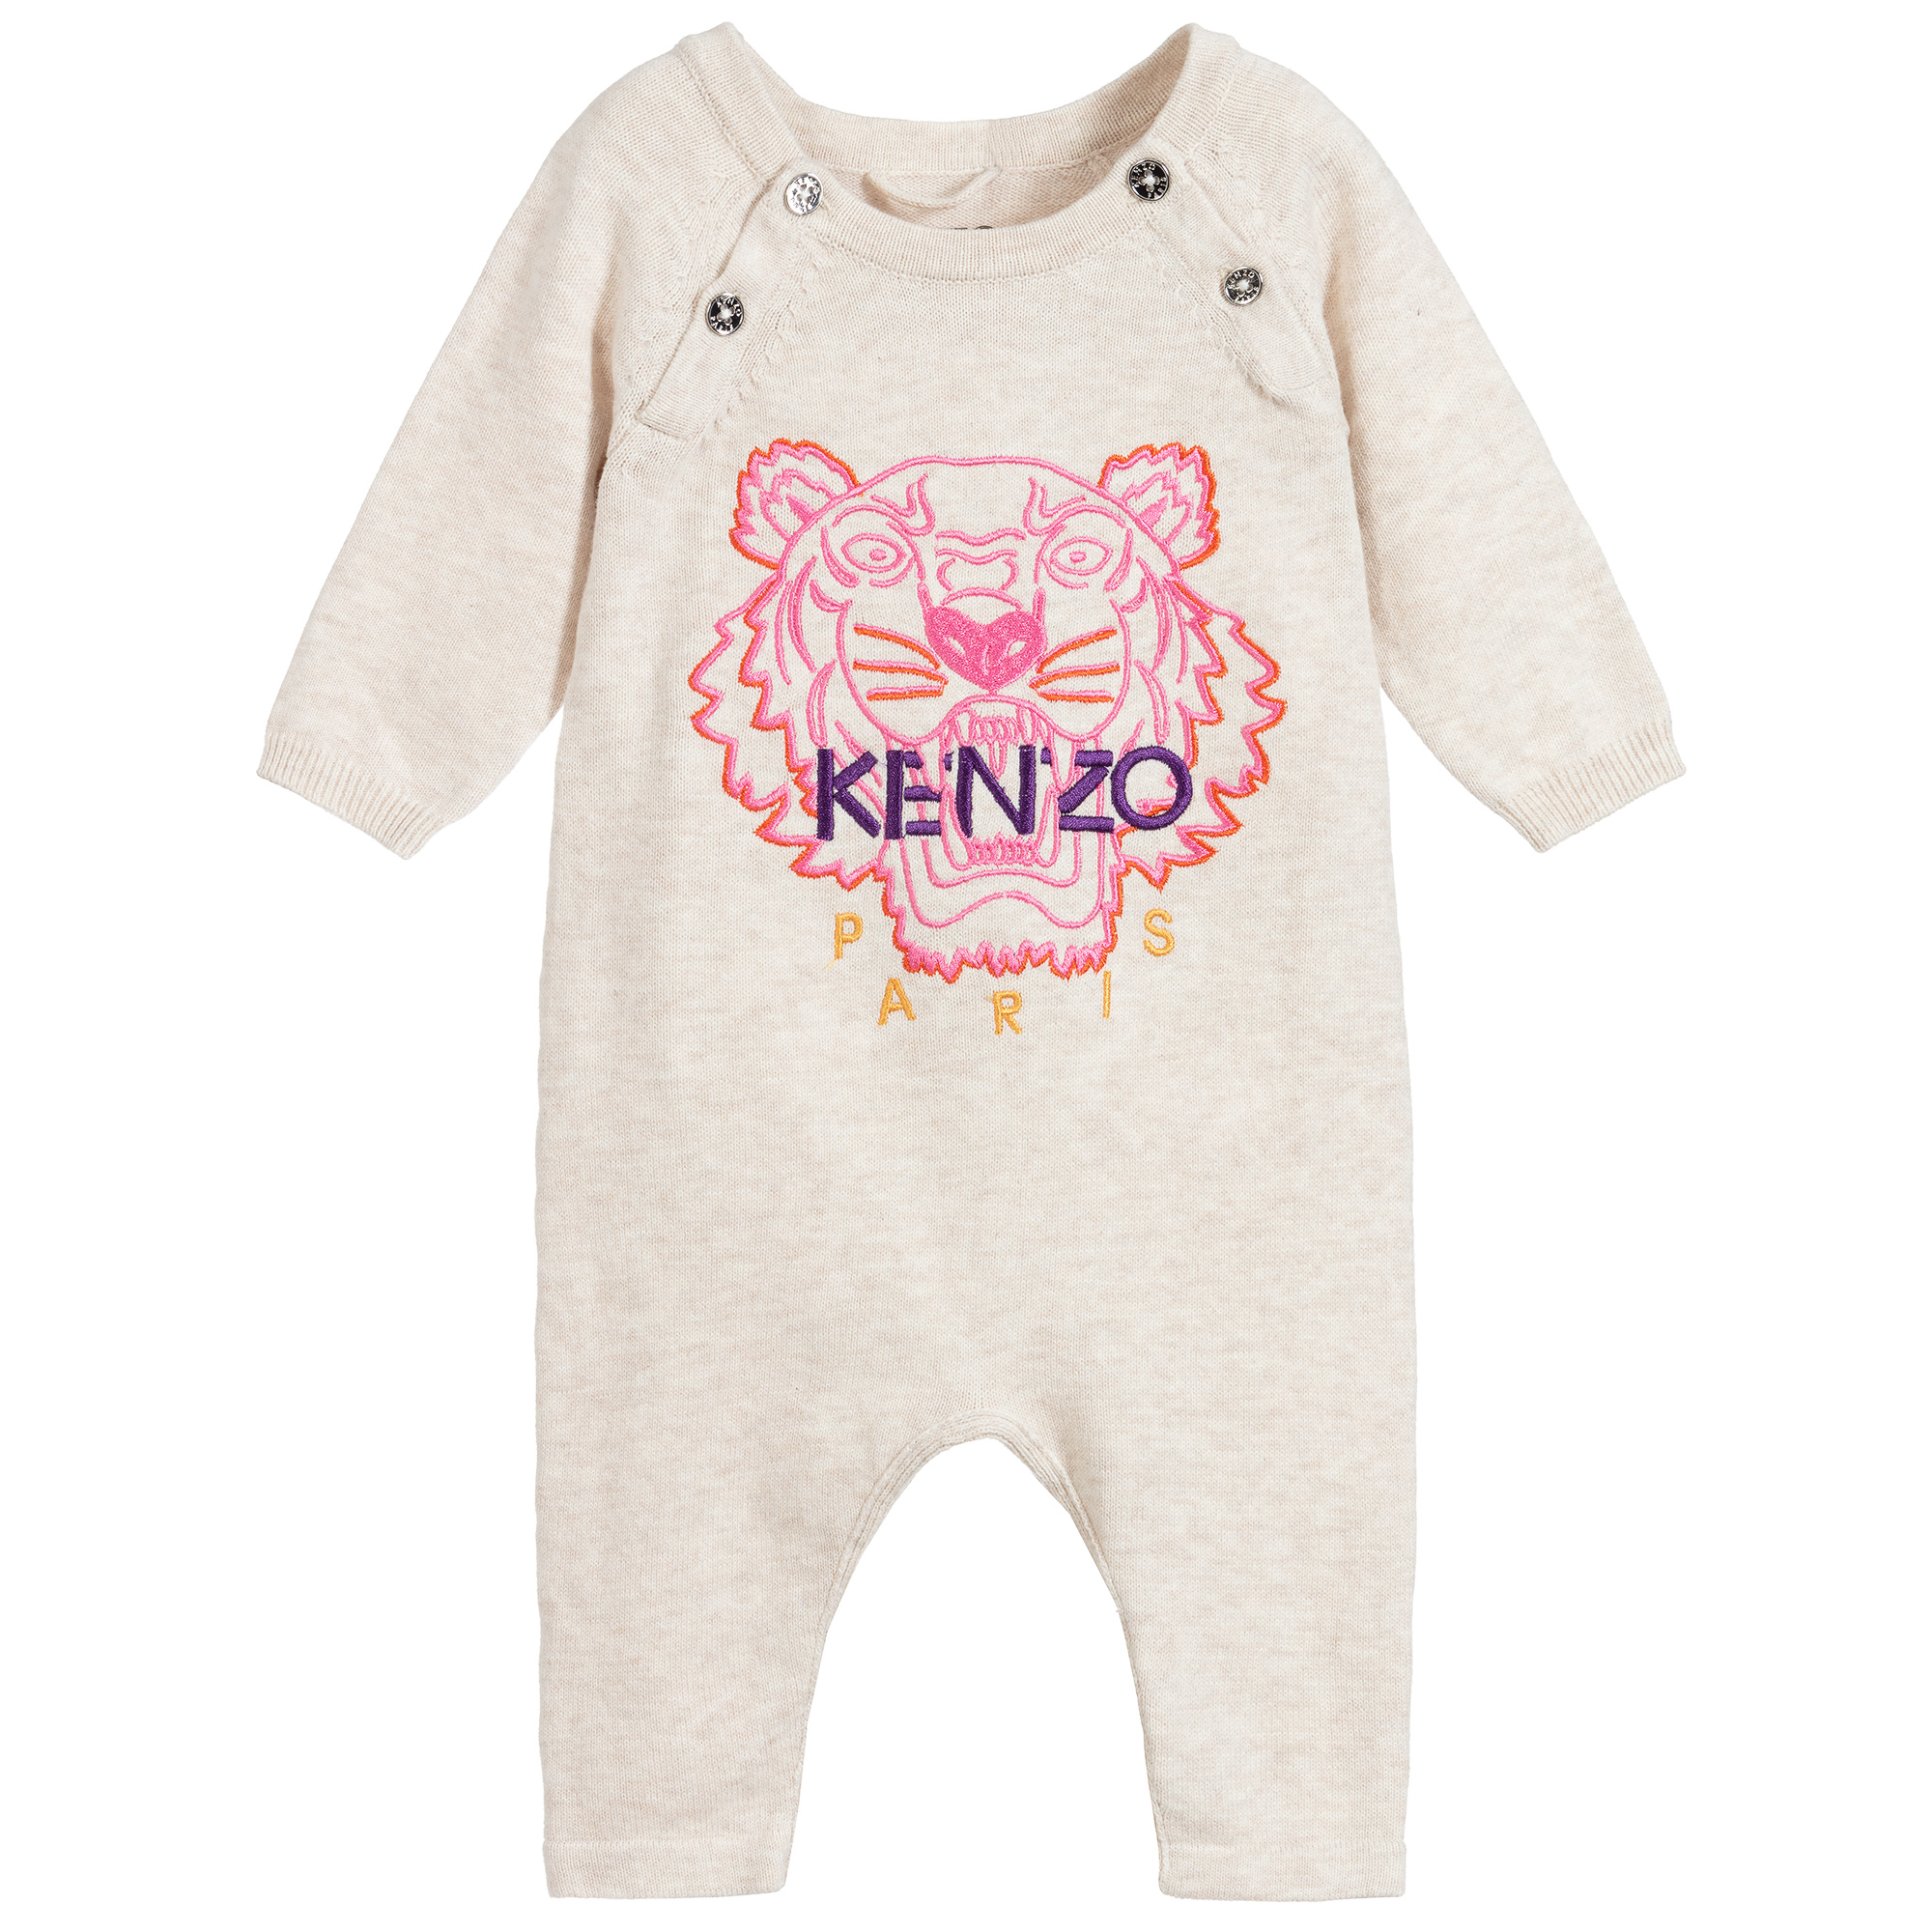 kenzo baby suit